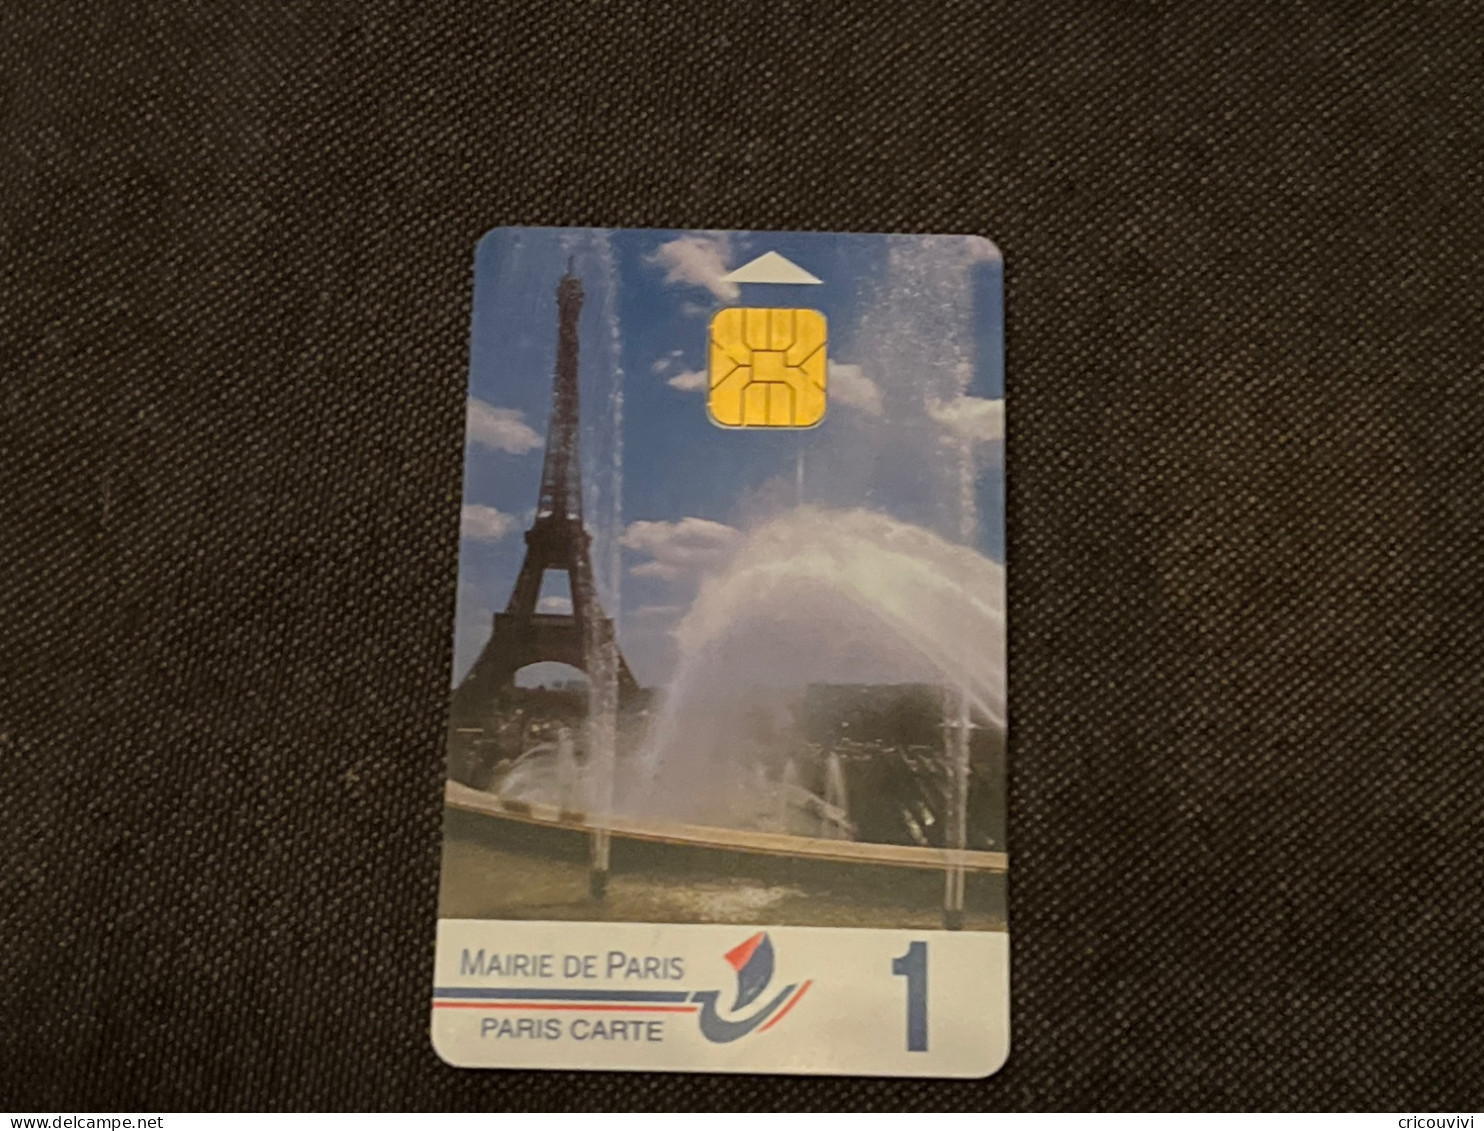 Paris Carte 14 - PIAF Parking Cards